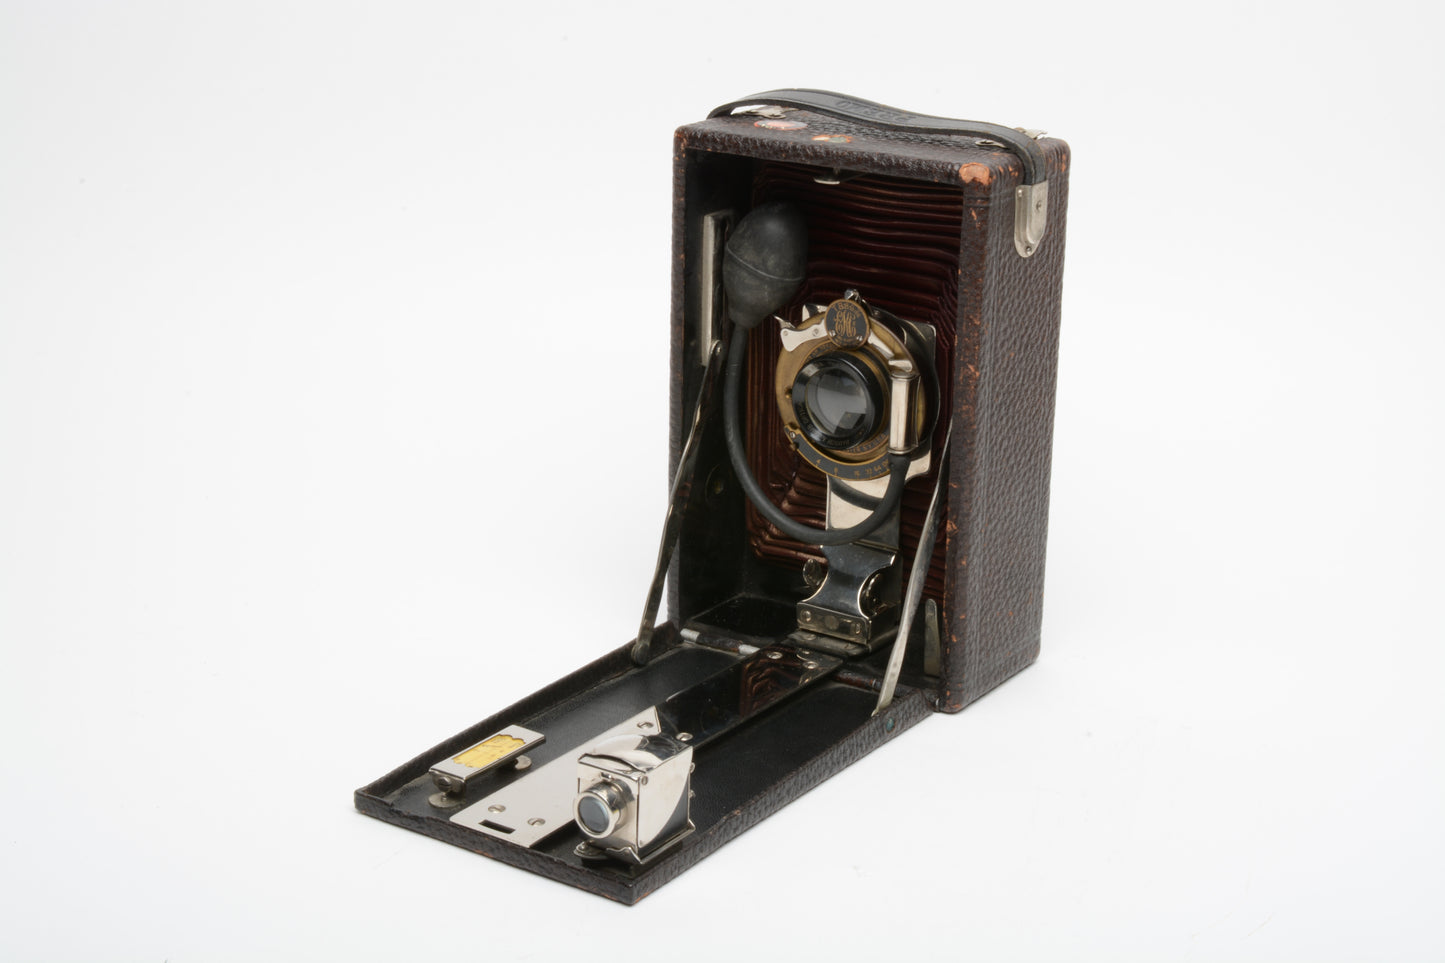 Vintage Kodak Premo 3A Camera, working shutter - nice & clean